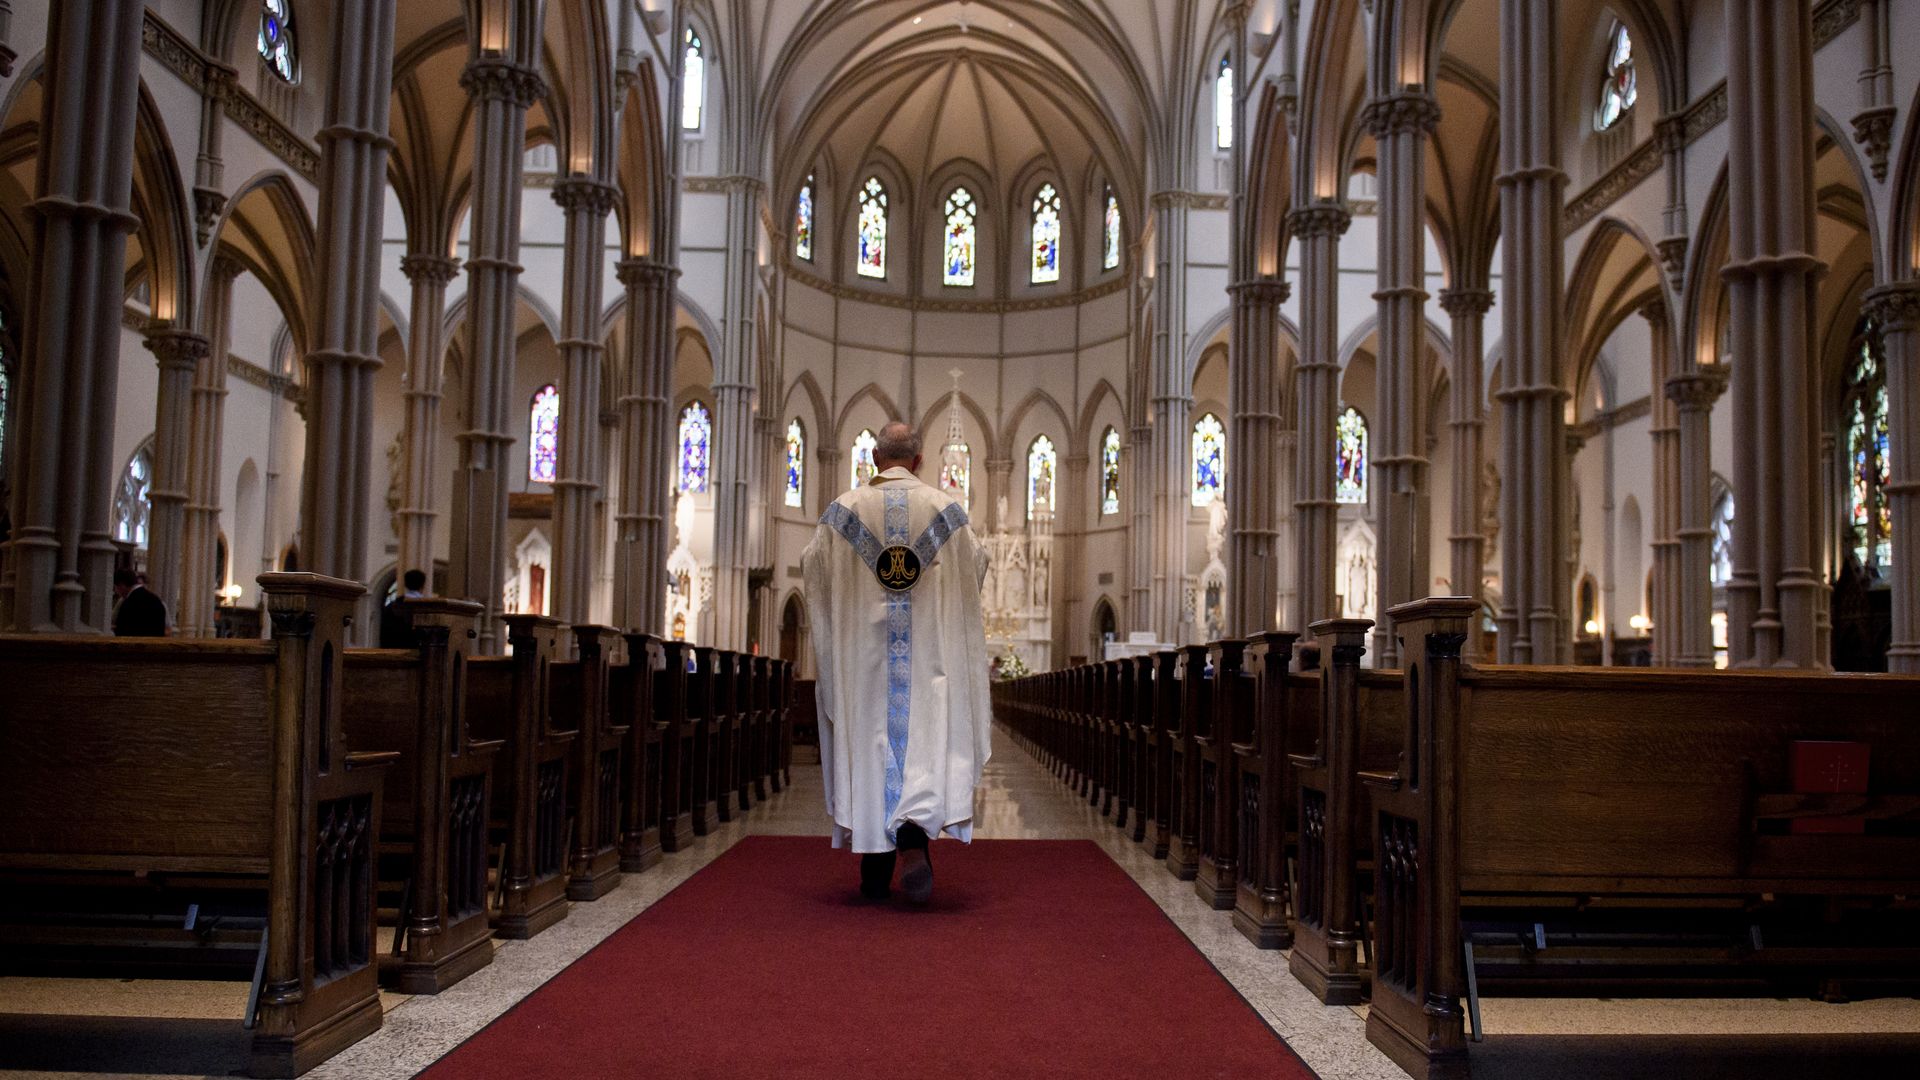 A priest walks down the corridors of church pews.